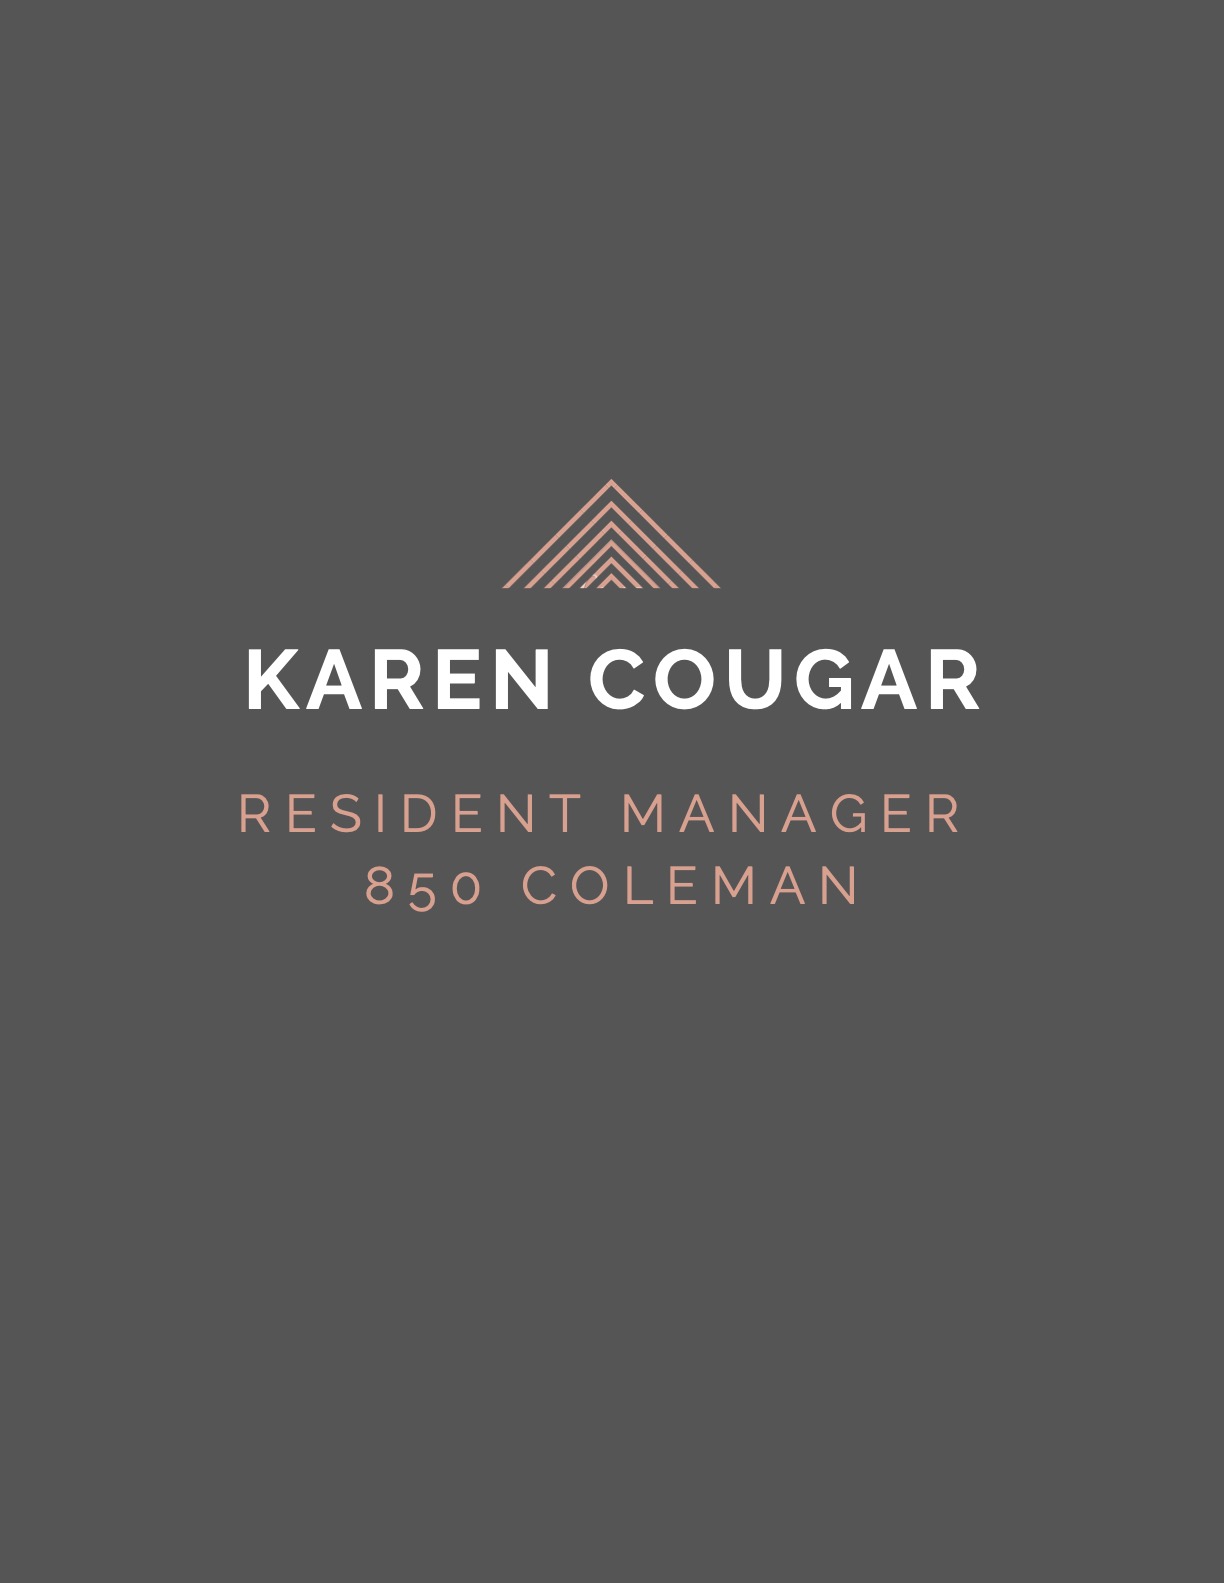 Karen Cougar